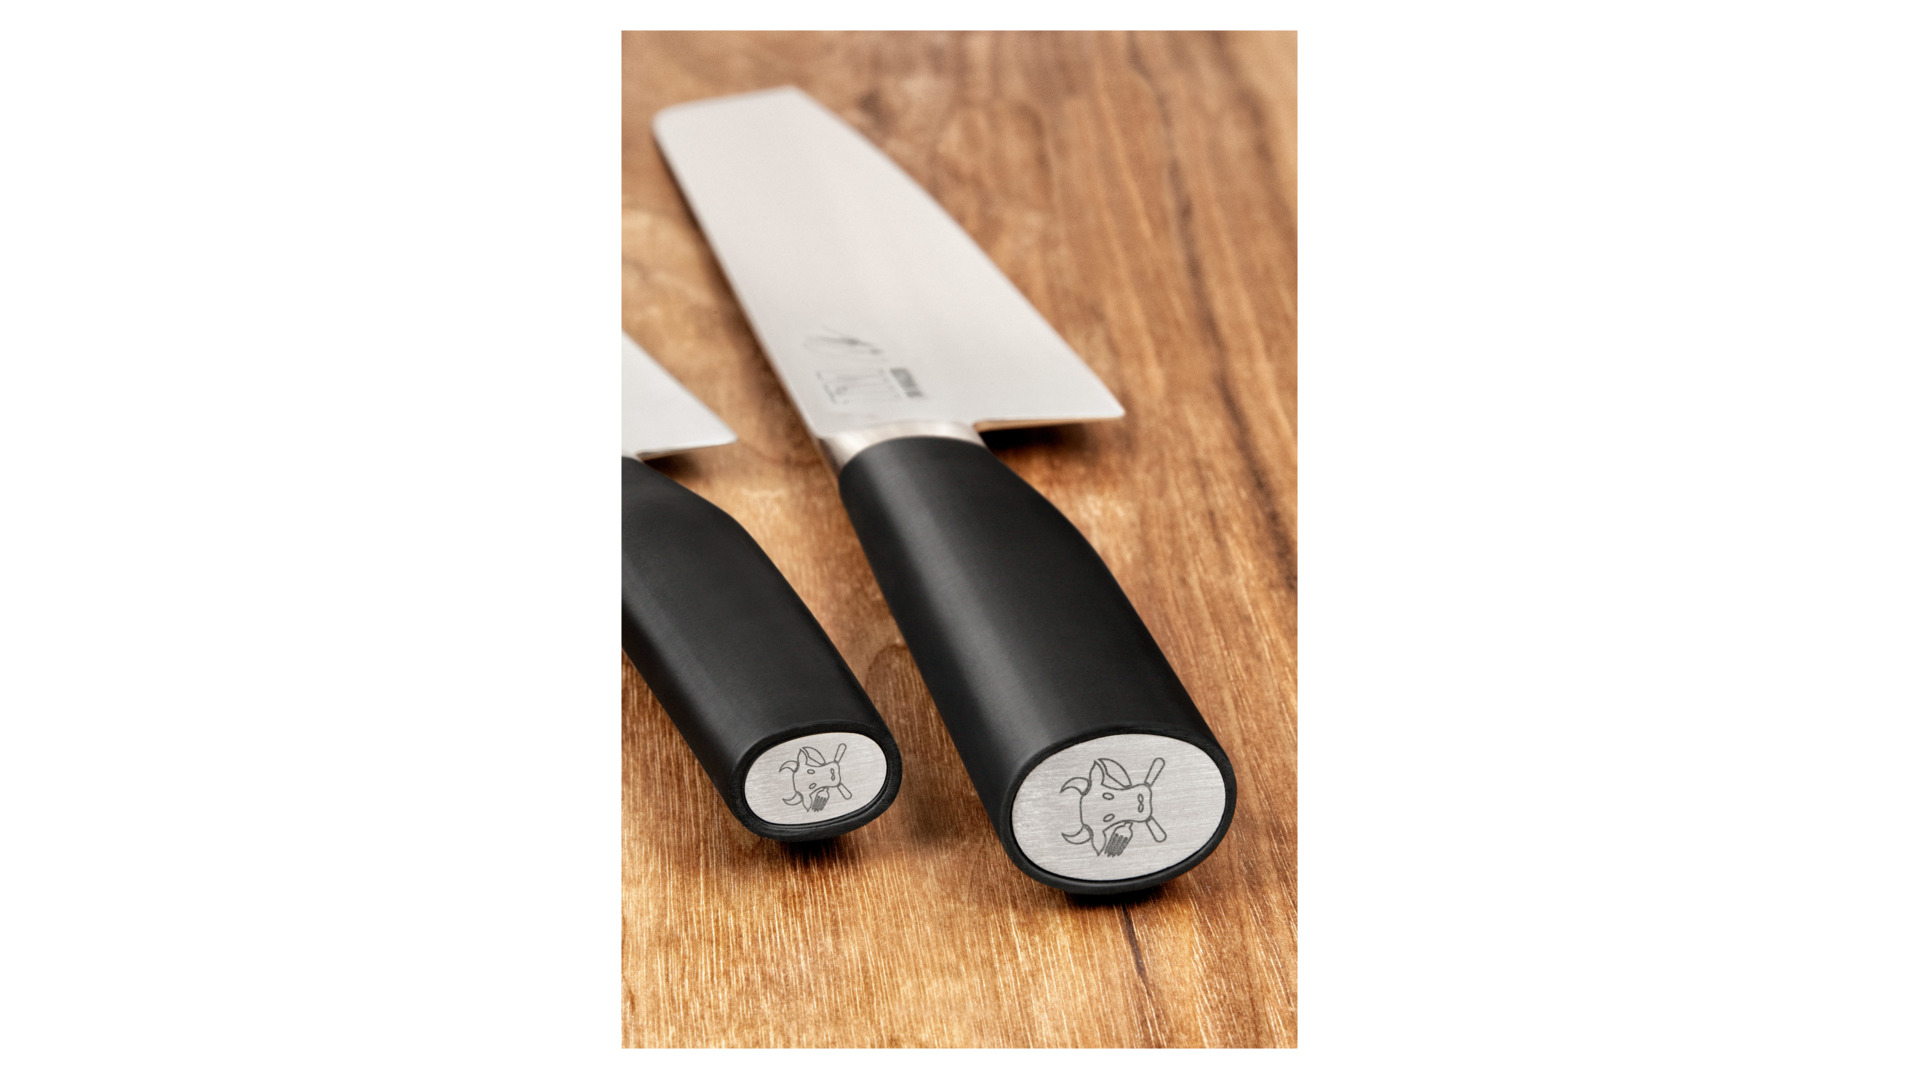 Нож для нарезки KAI Камагата 23 см, кованая сталь, ручка пластик